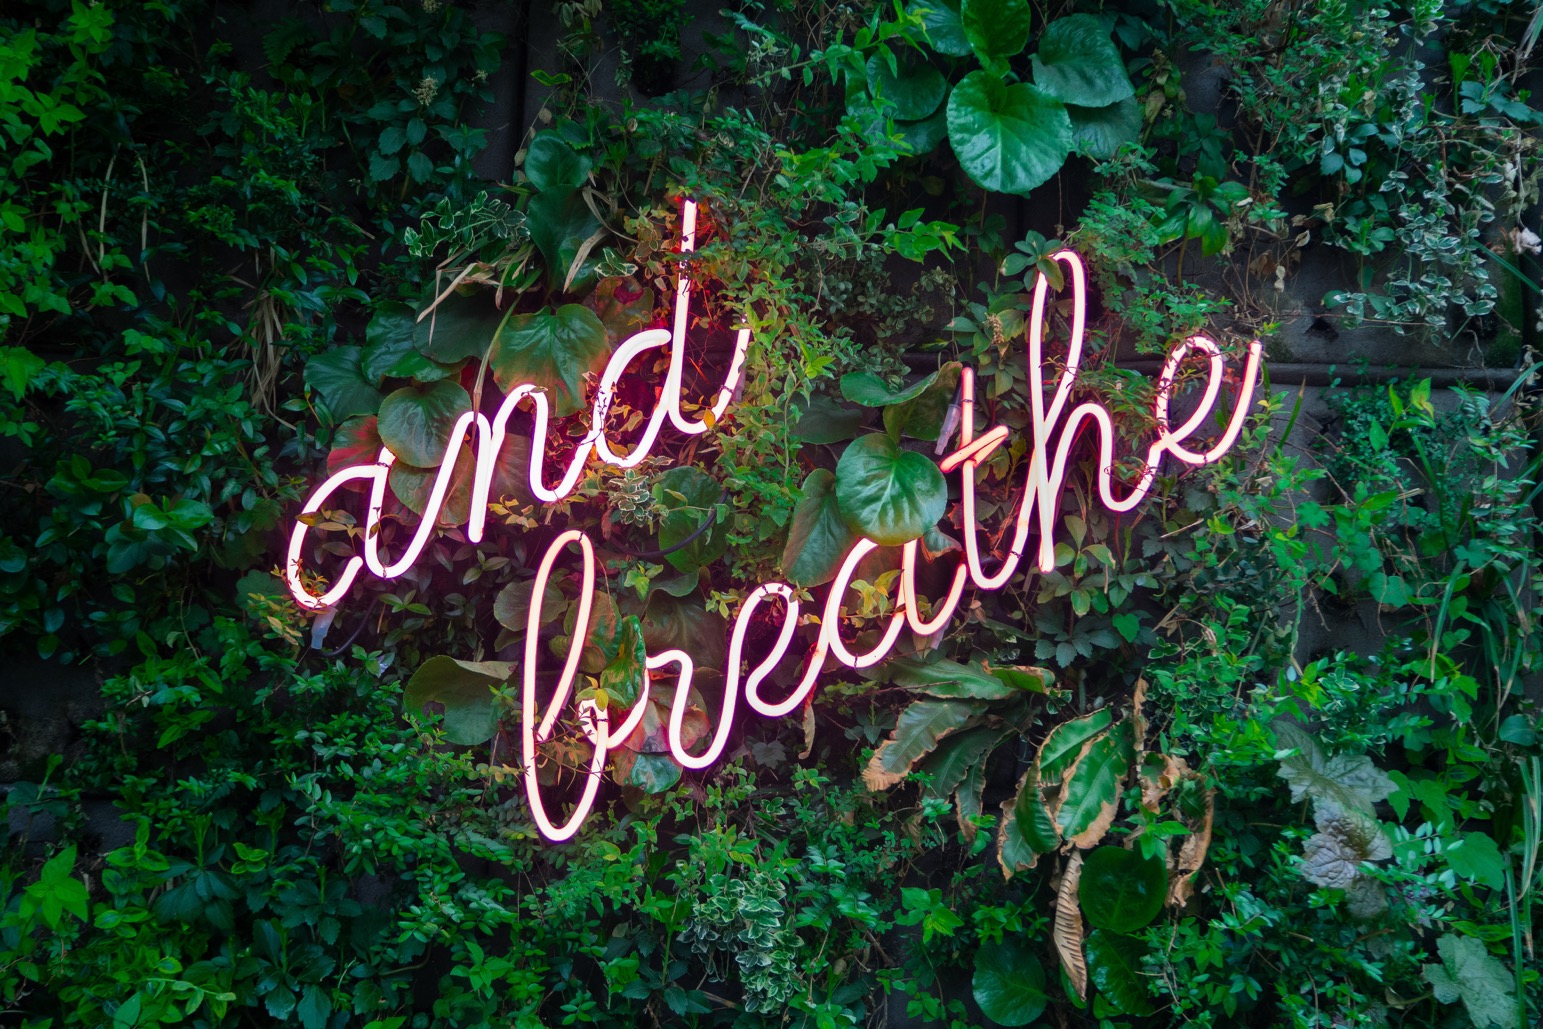 Breath & reconnect through the Wim Hof method